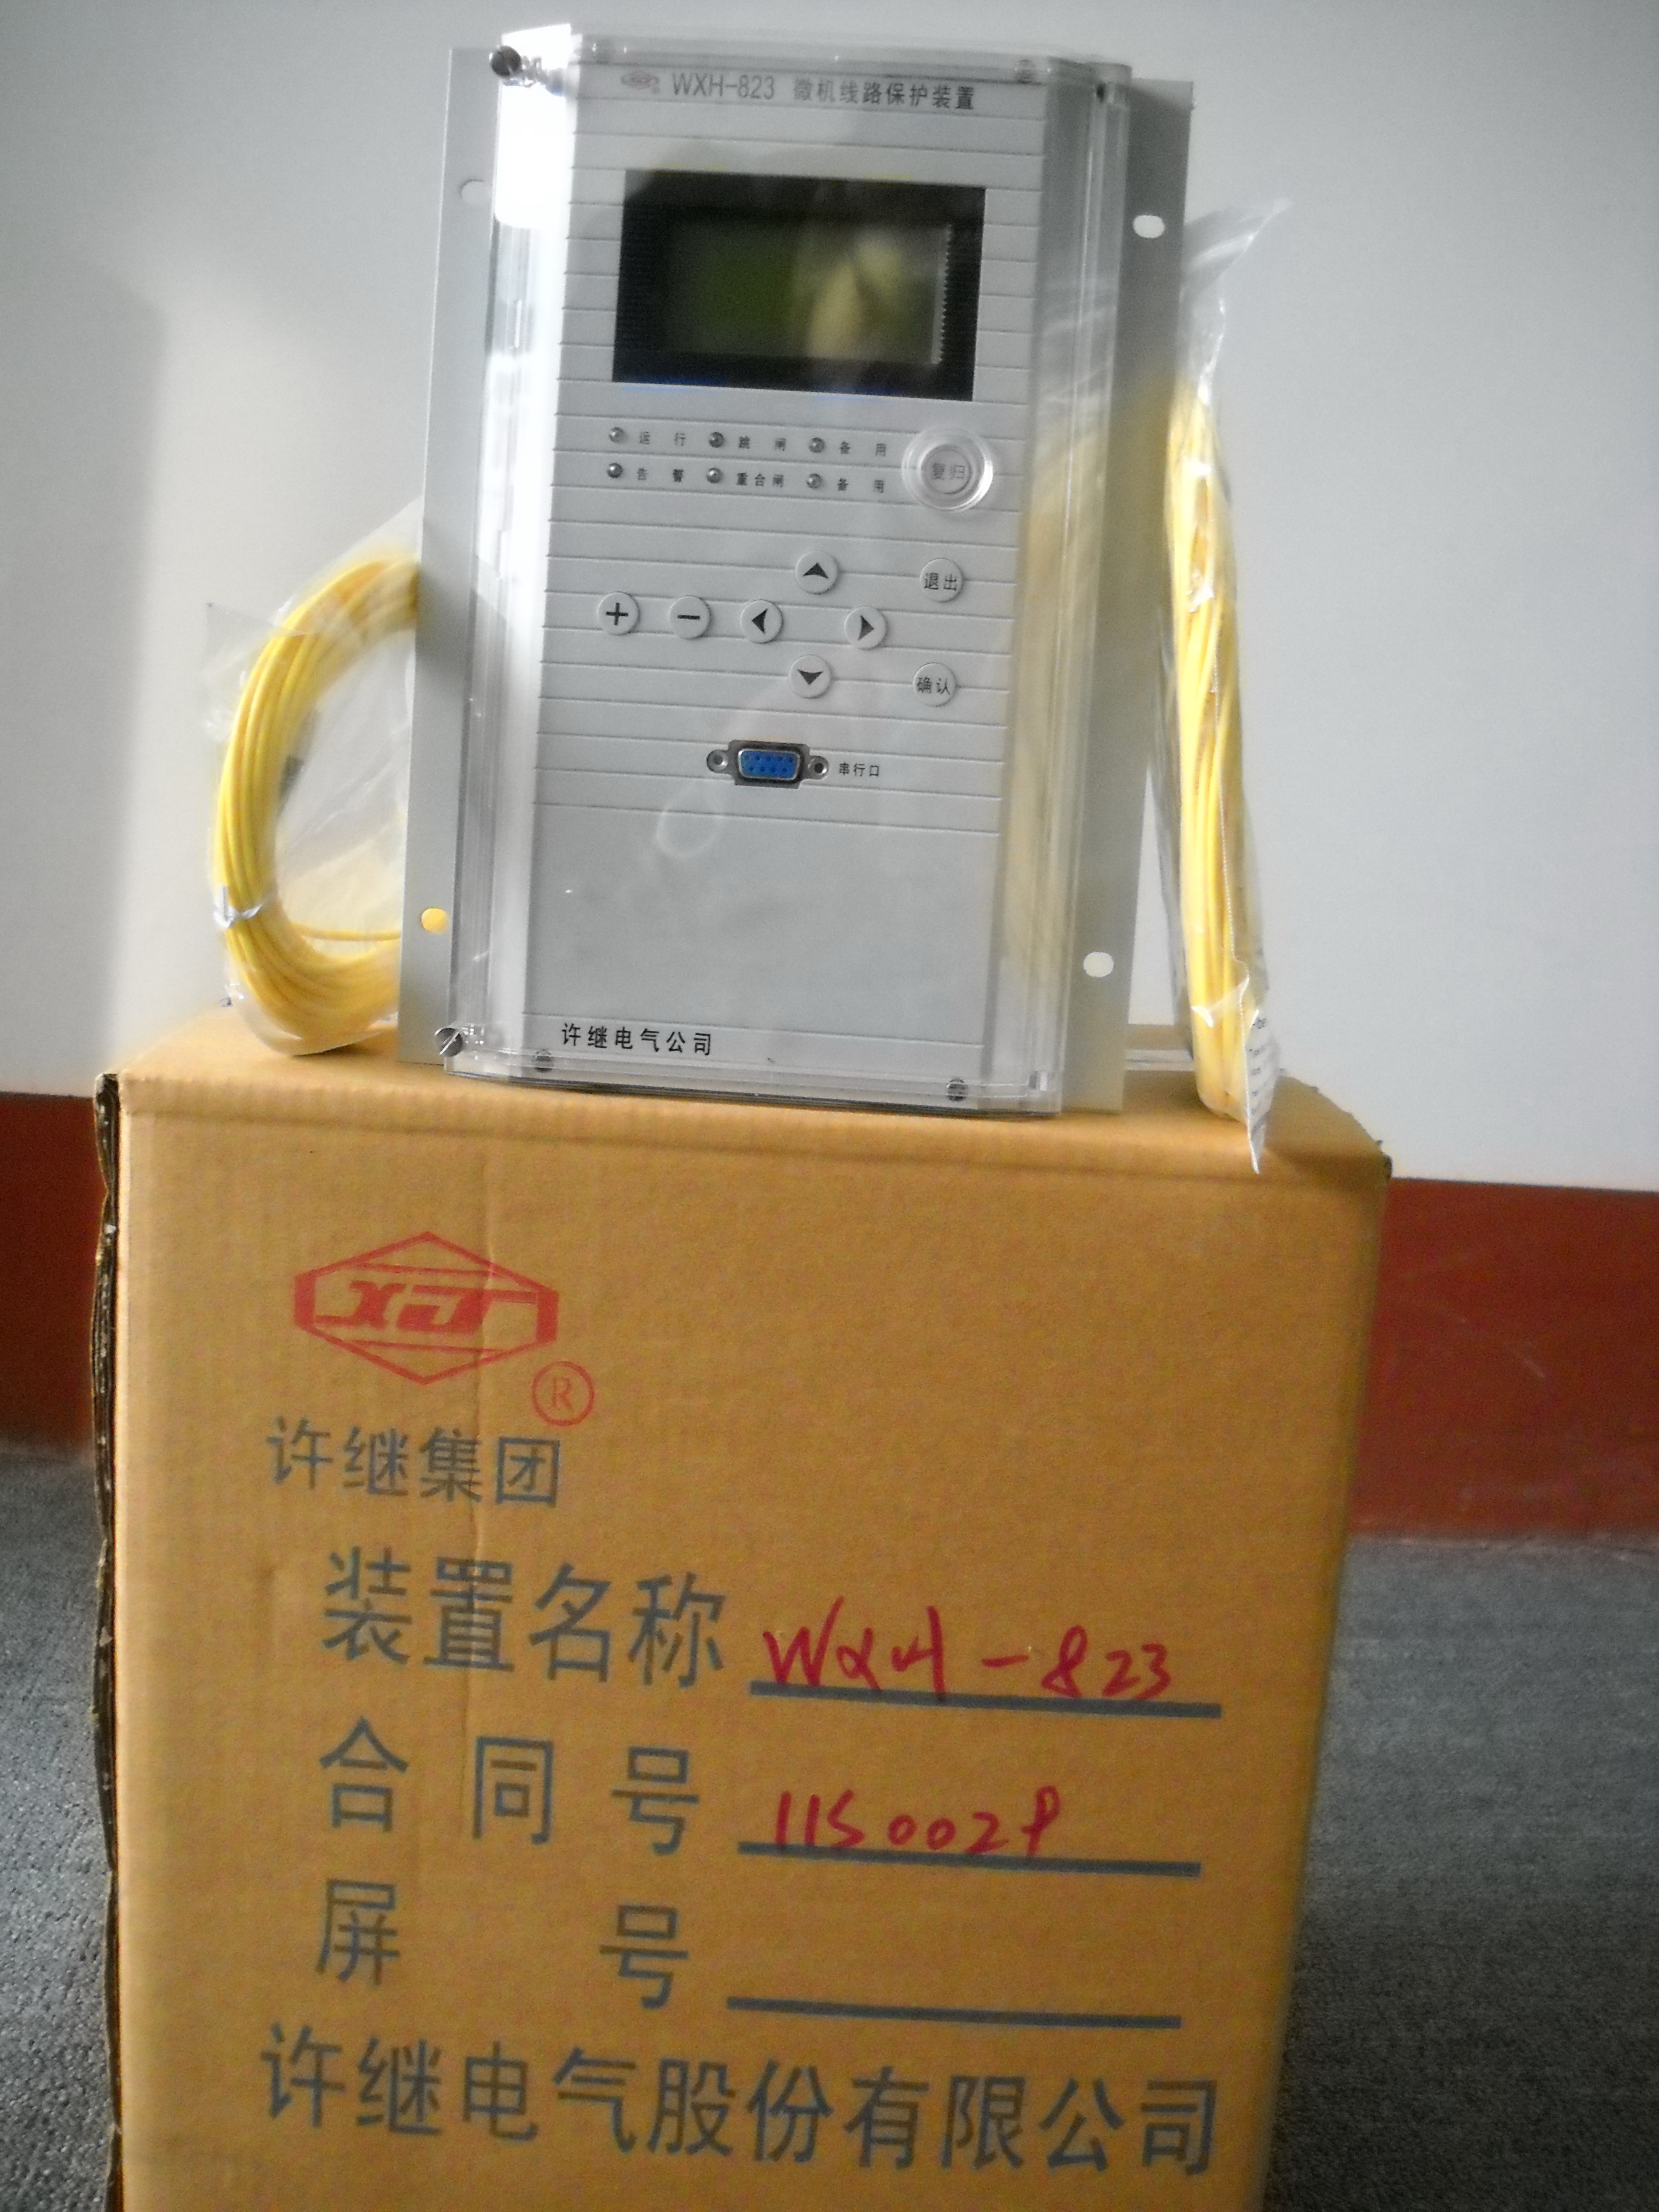 WXH-823微机线路保护测控装许继现货图片